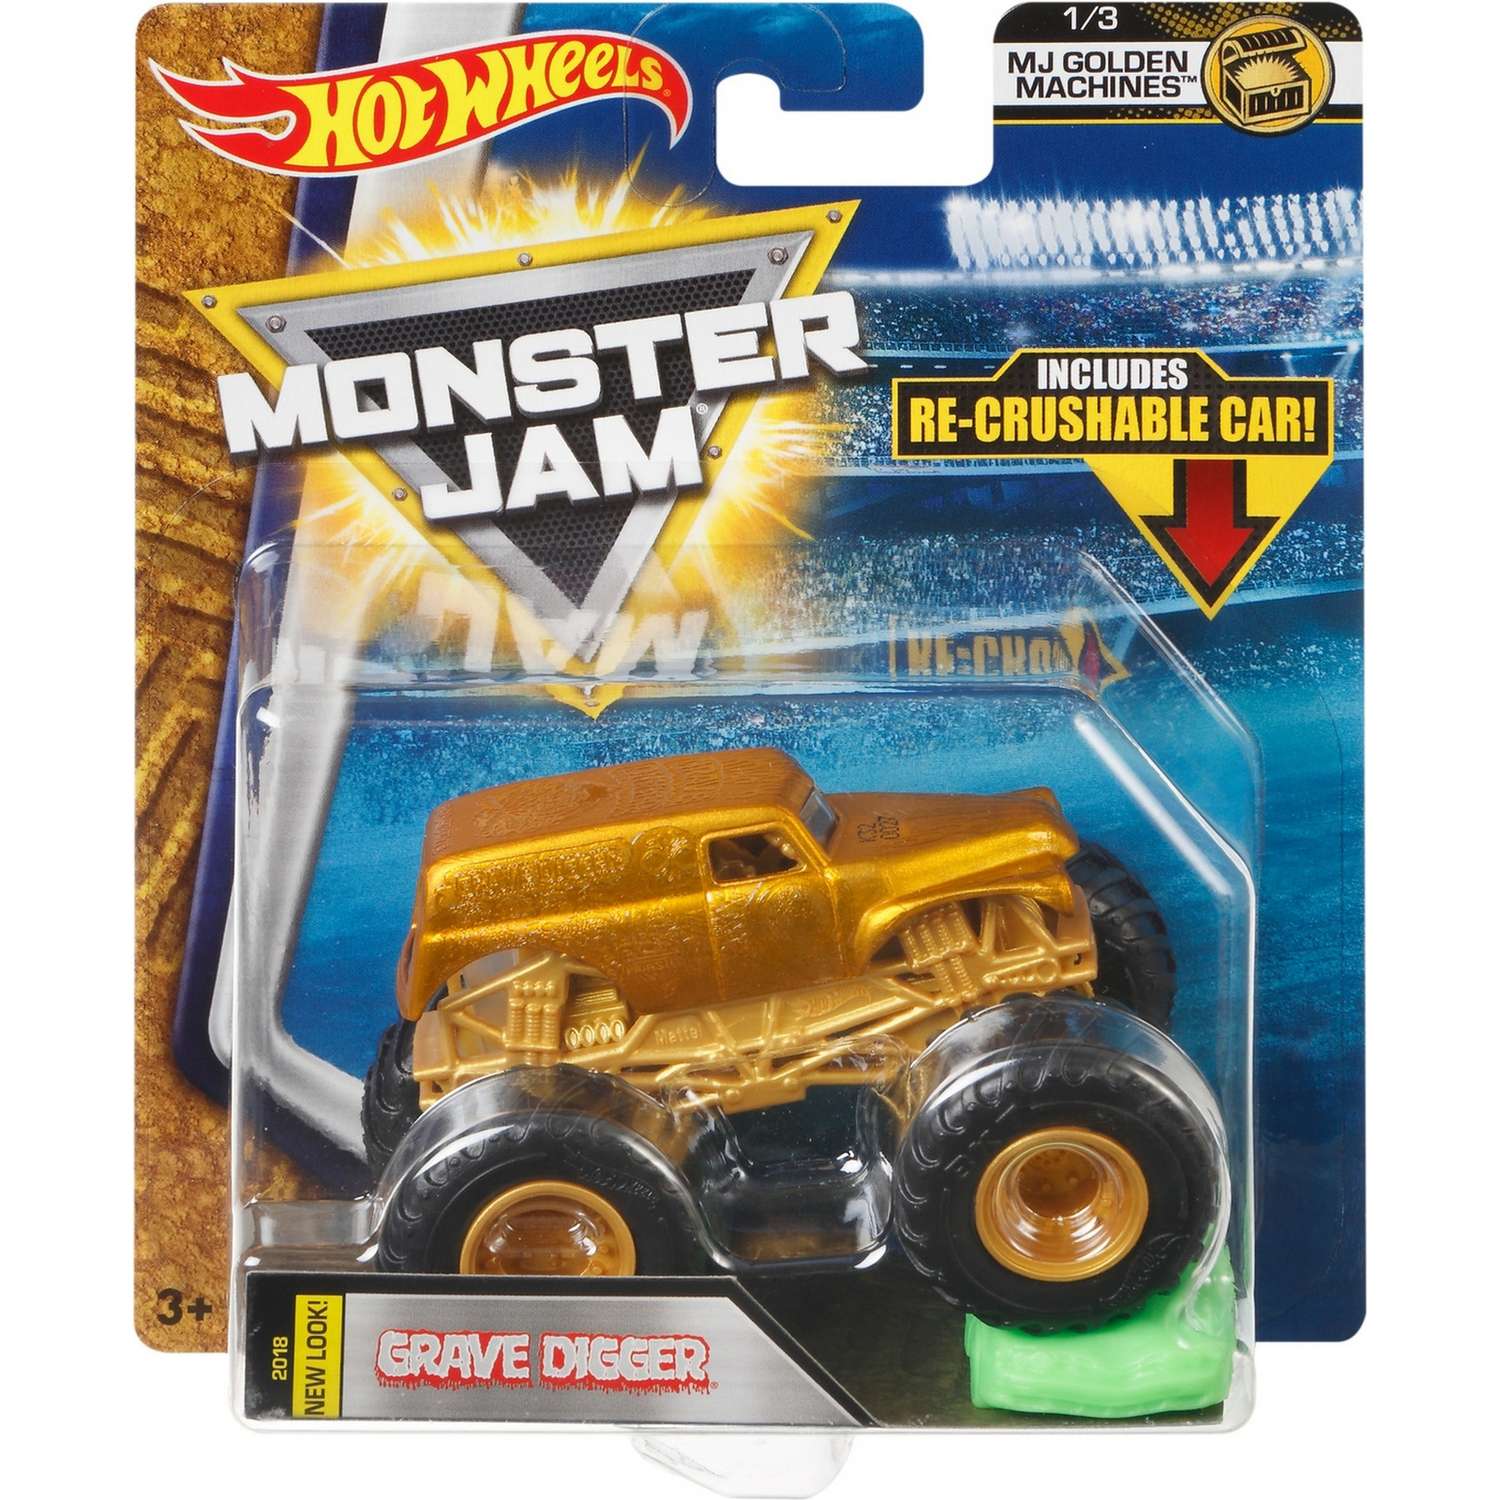 Машина Hot Wheels Monster Jam 1:64 Golden Machines Грейв Диггер FLW88 21572 - фото 2